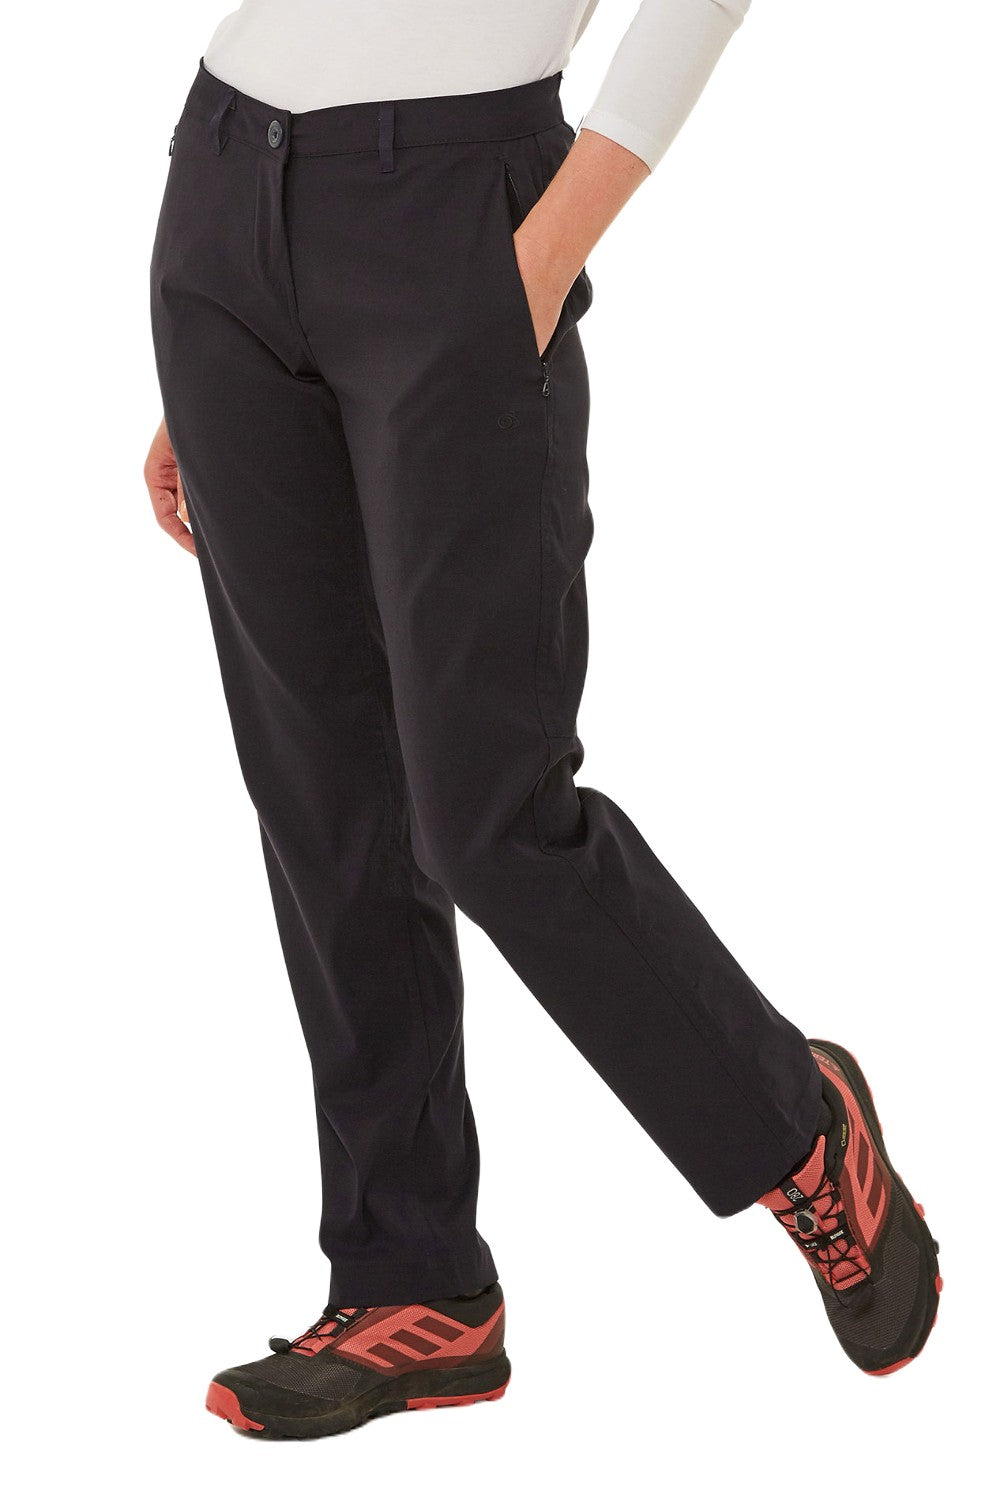 Womens Kiwi Pro II Waterproof Trousers  Black  Craghoppers UK